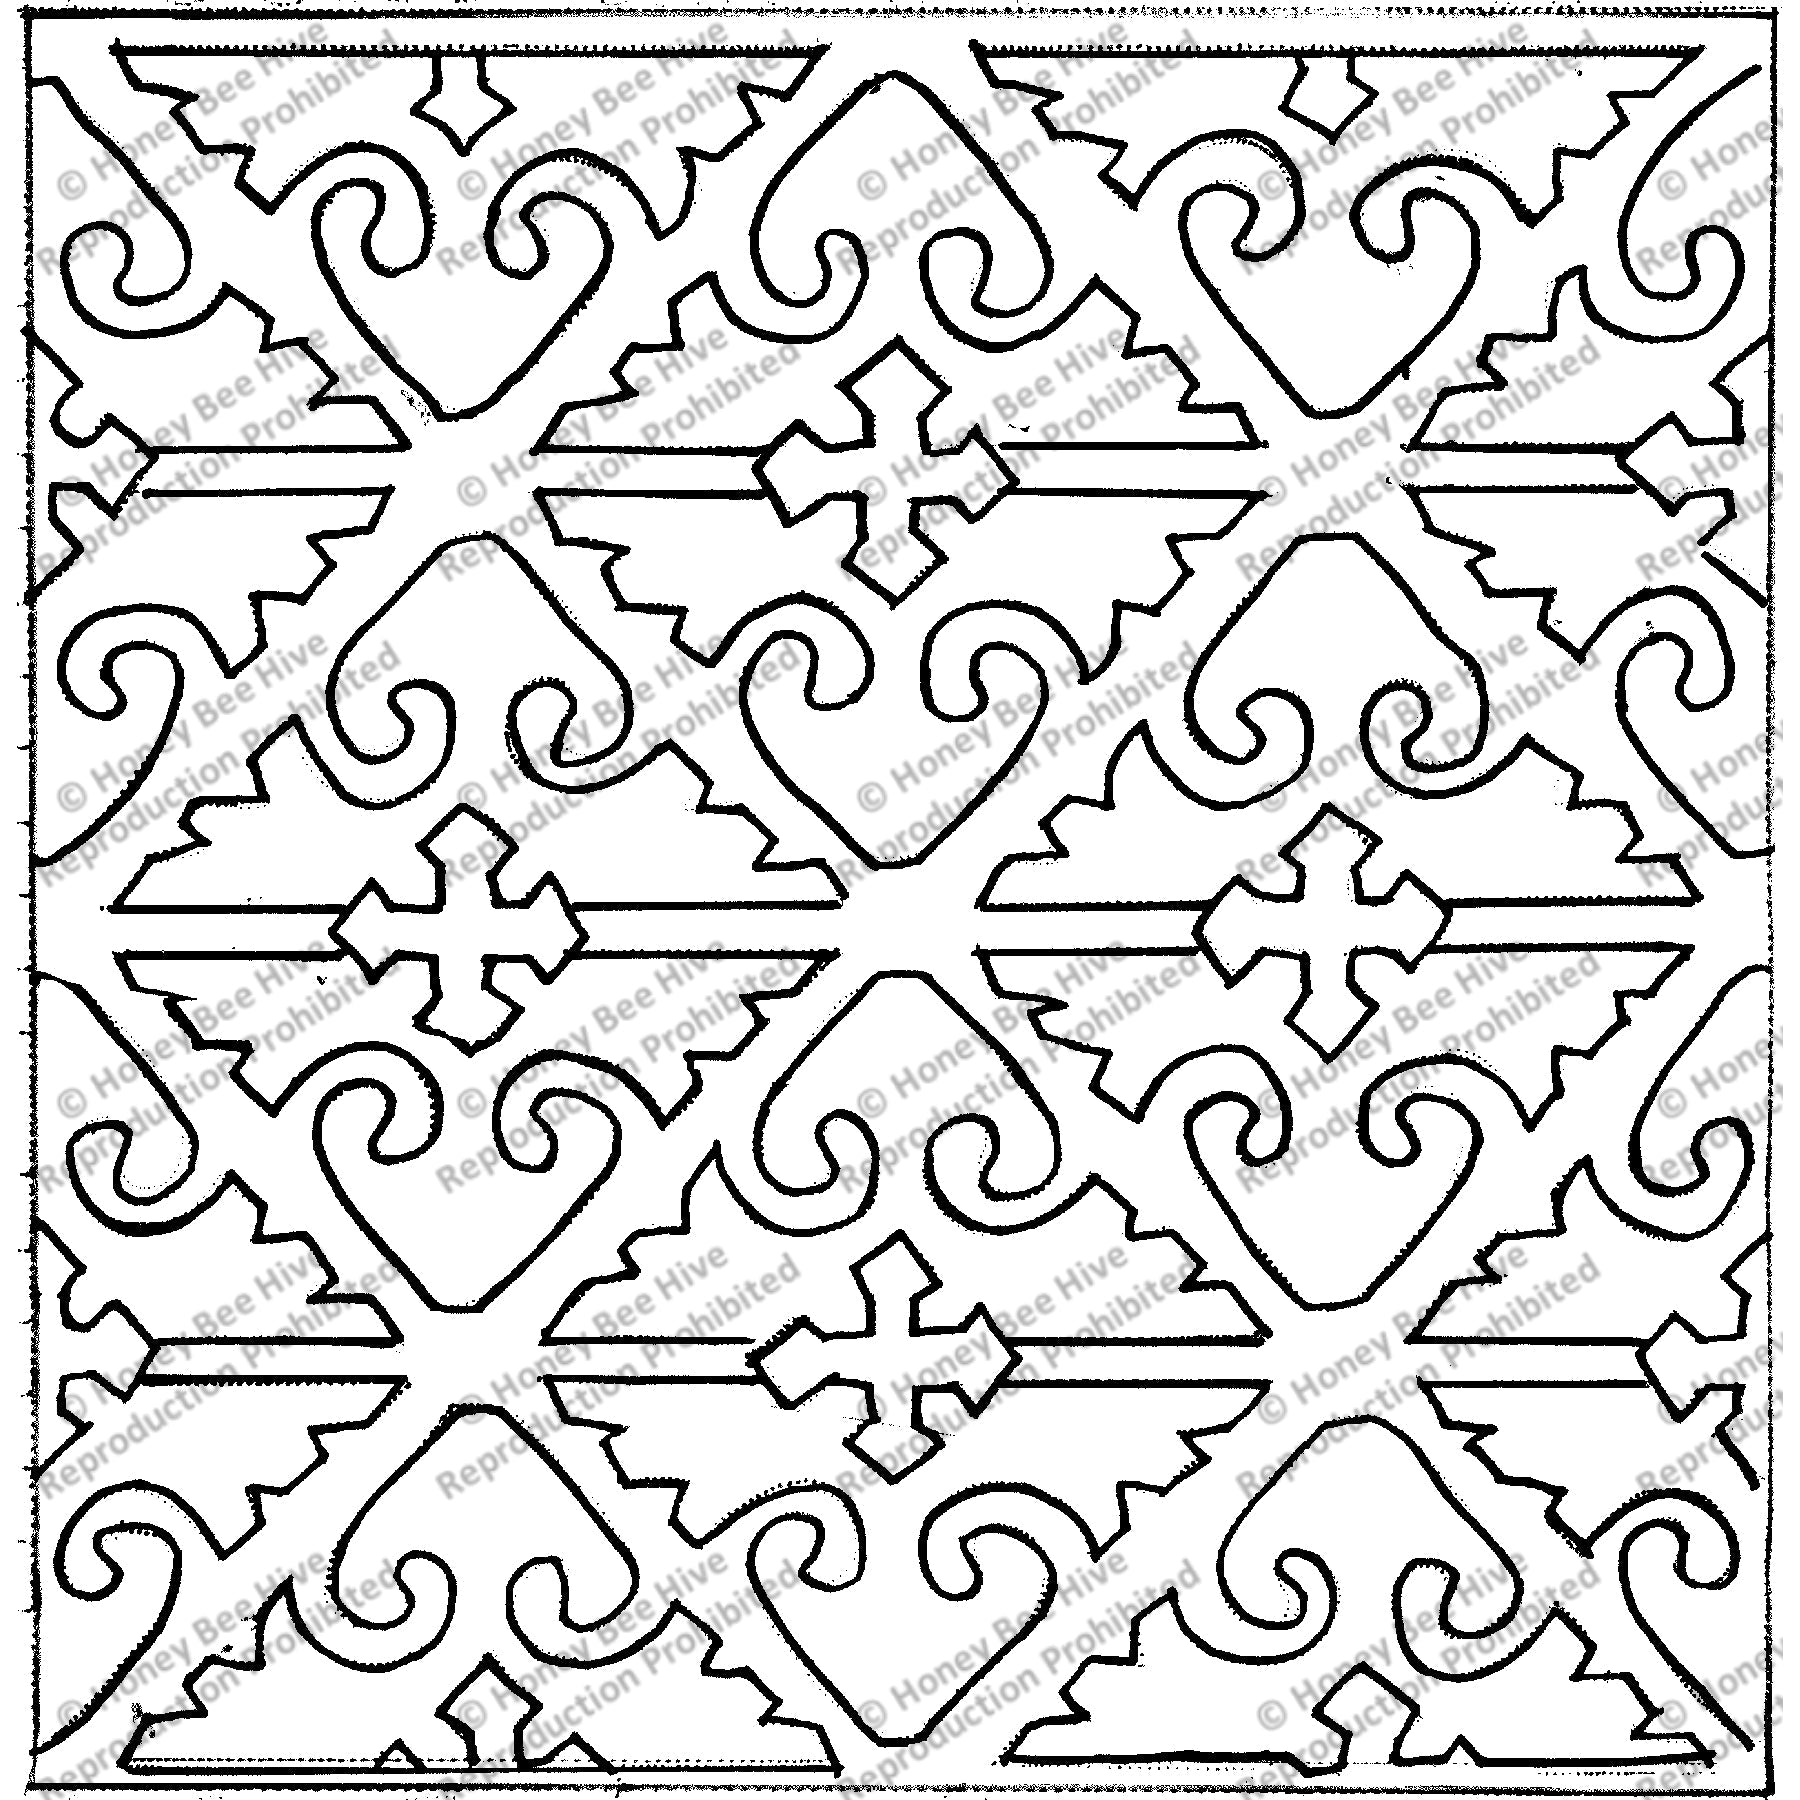 Cankiri, rug hooking pattern